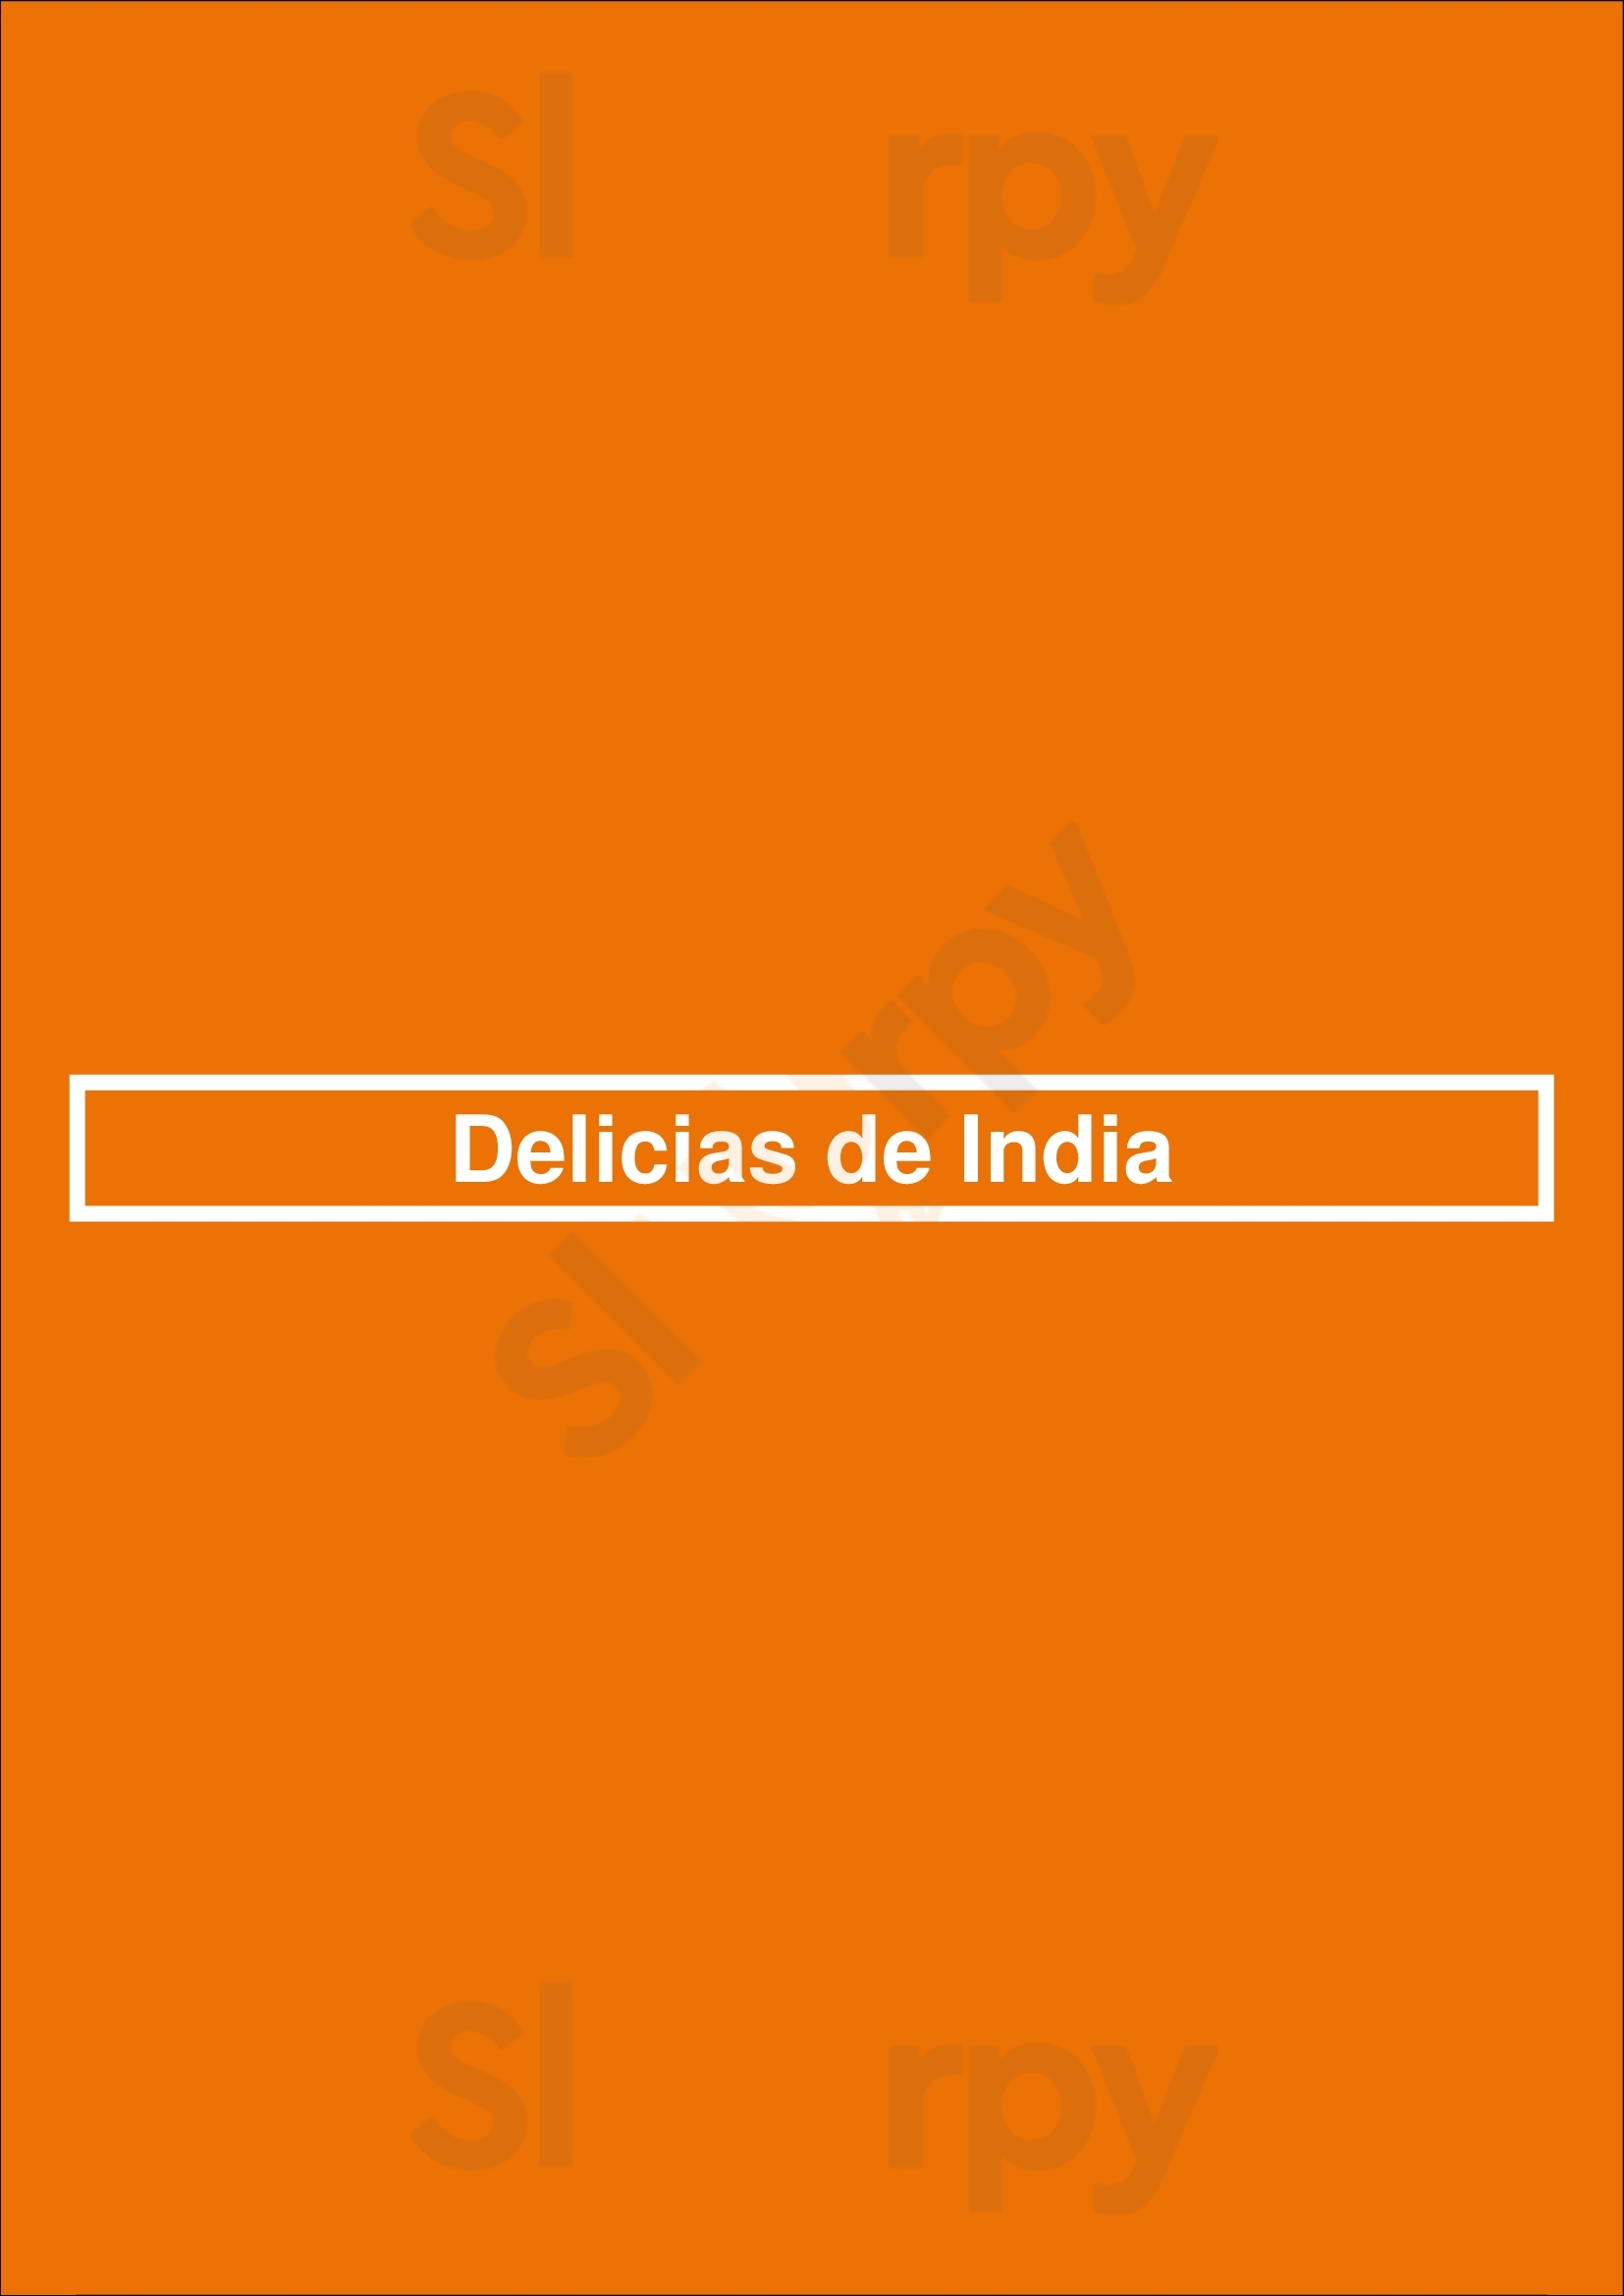 Delicias De India Leganés Menu - 1